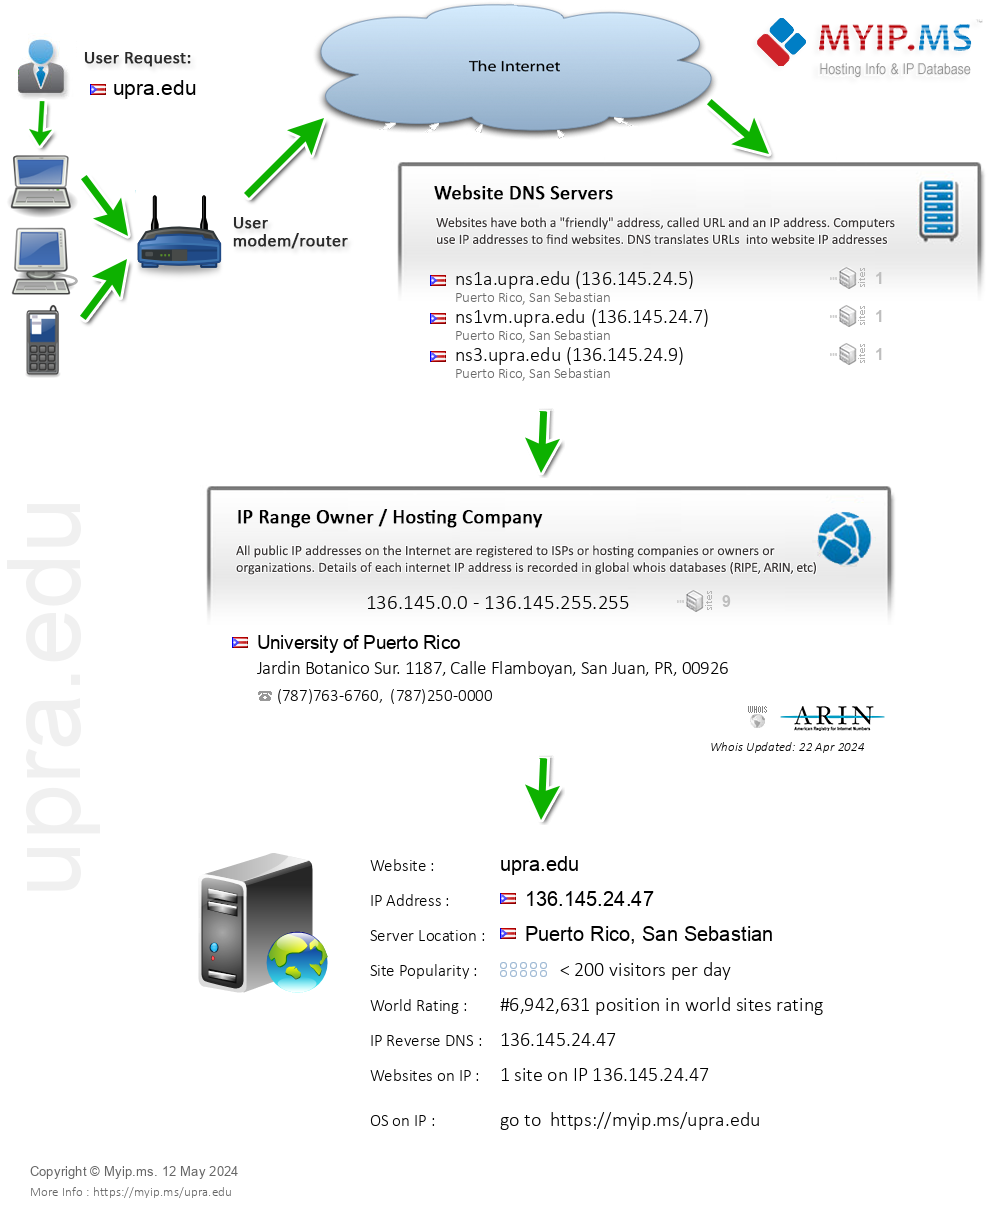 Upra.edu - Website Hosting Visual IP Diagram